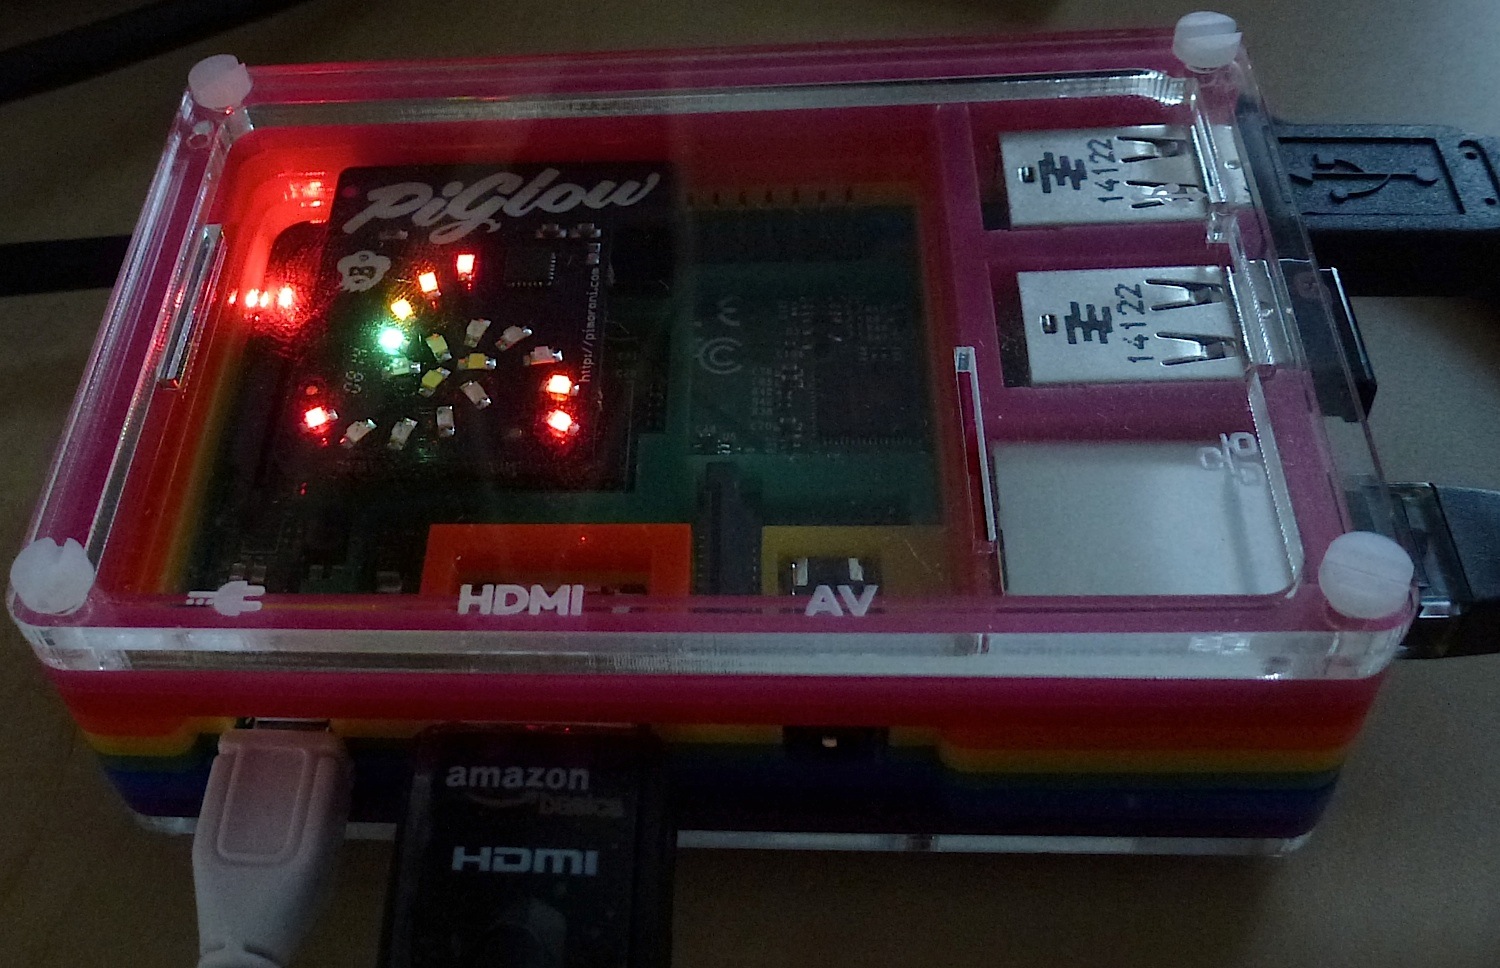 PiGlow in meinem Raspberry Pi Modell B+